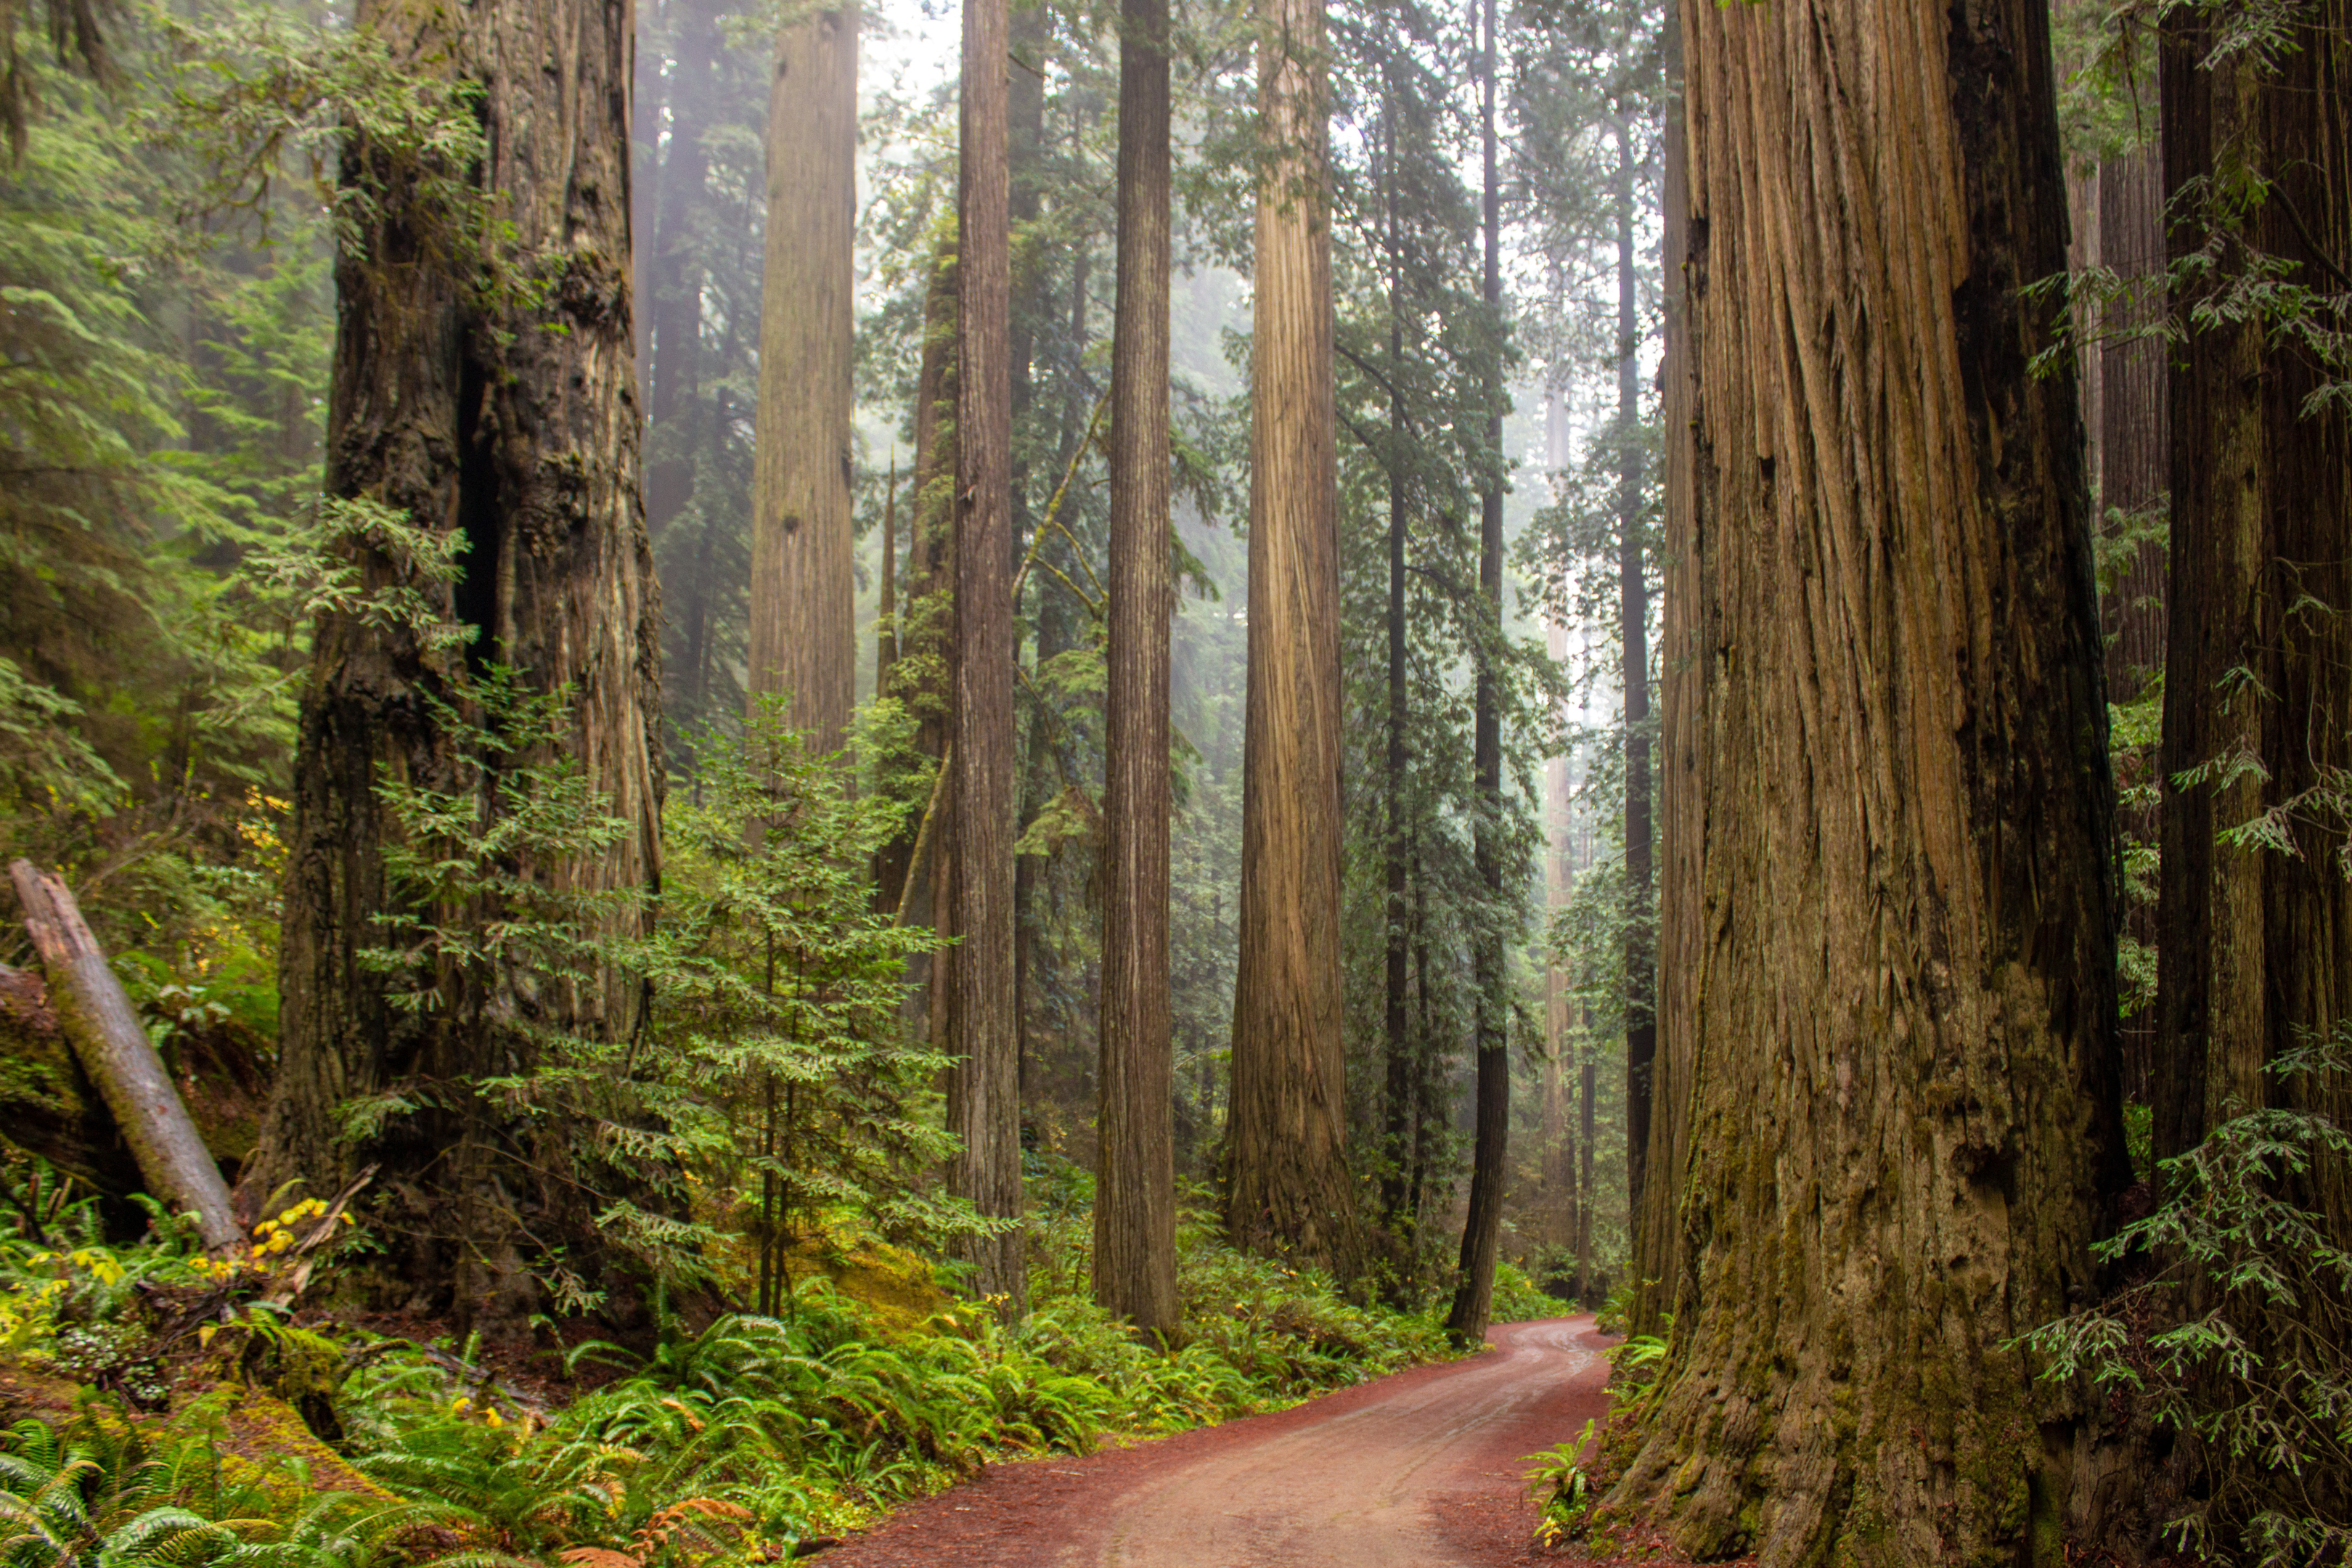 A trail through a tall tree forest